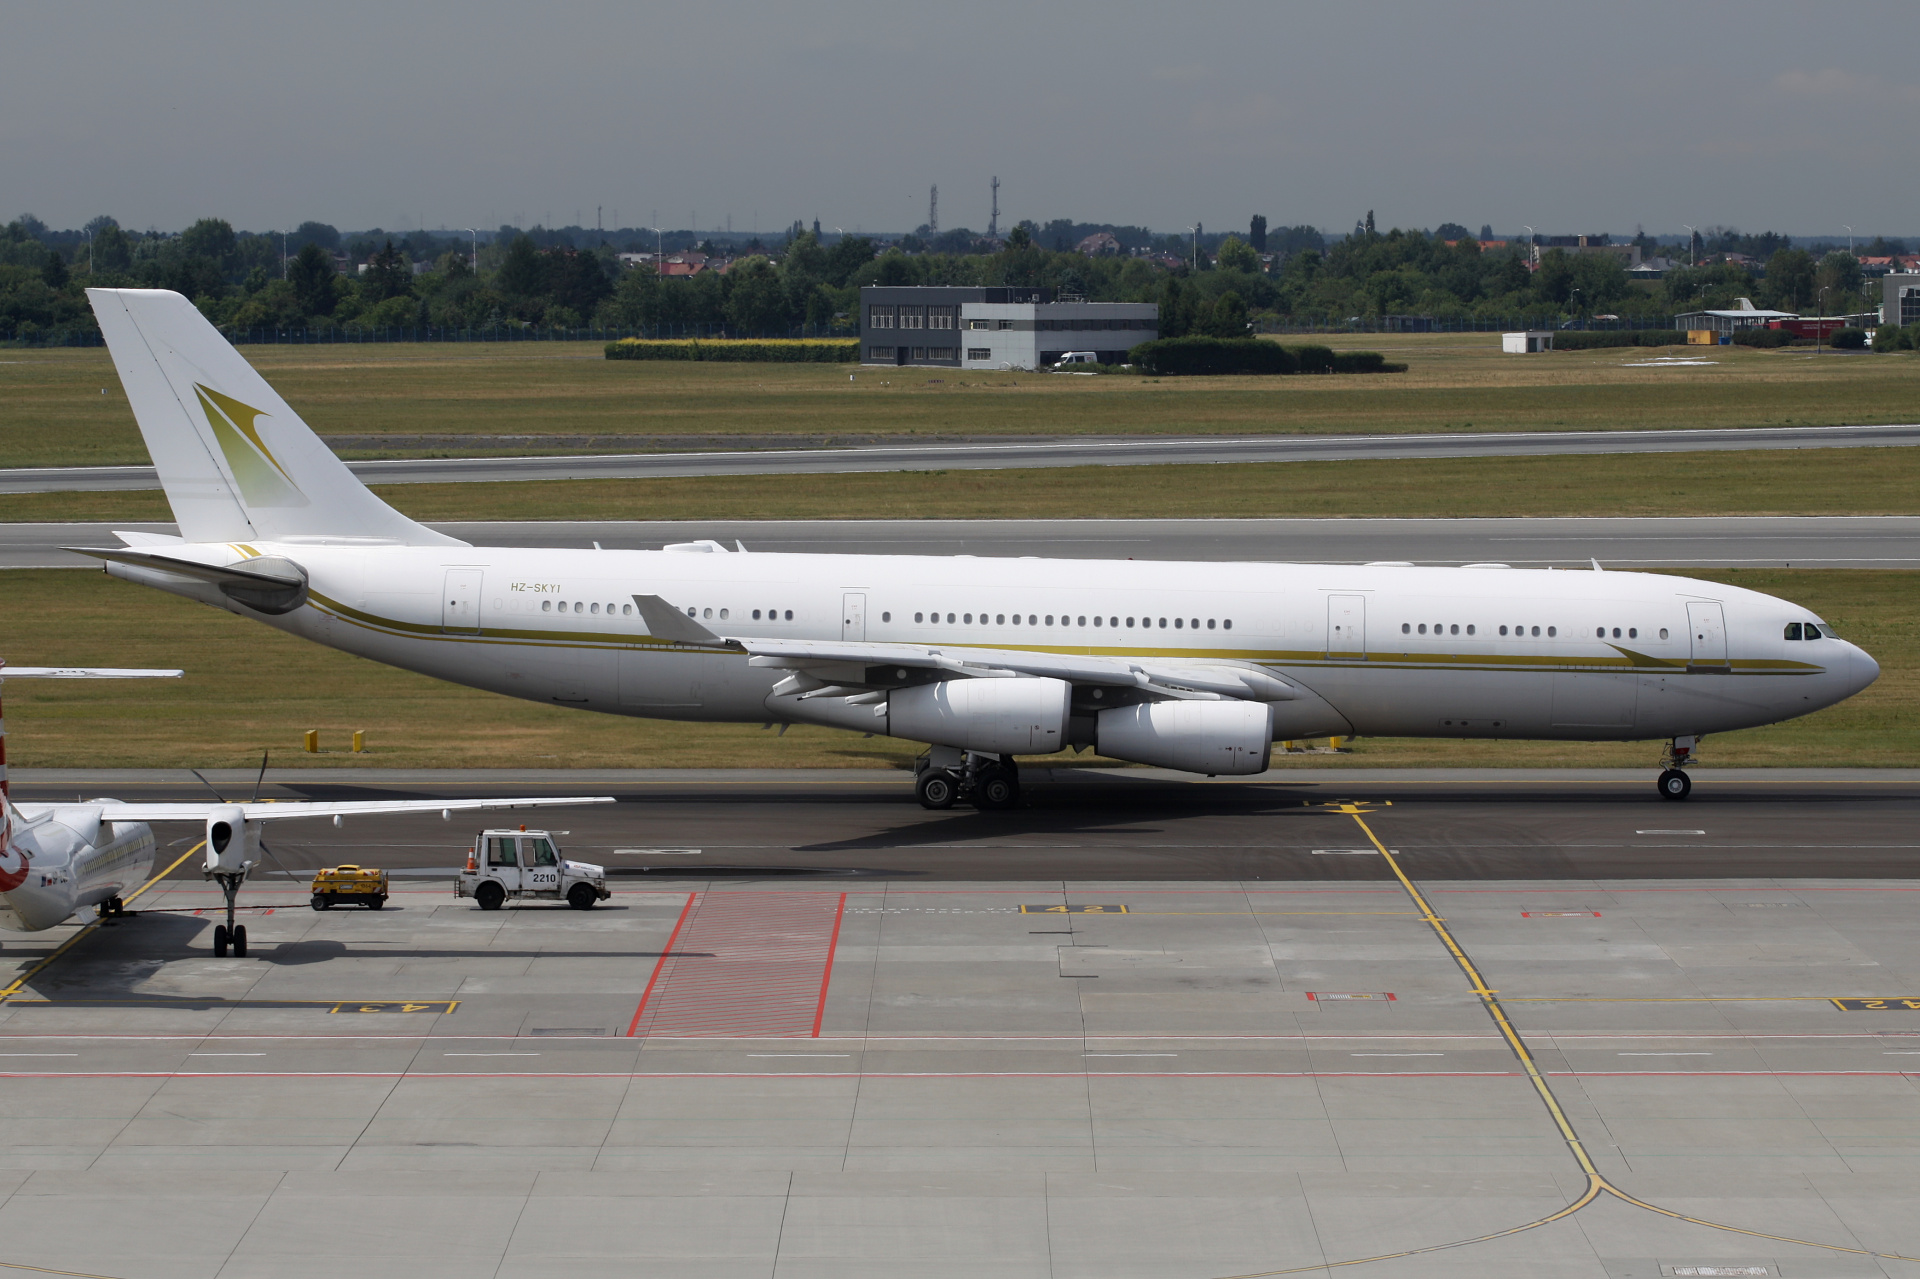 HZ-SKY1, Sky Prime Aviation Services (Aircraft » EPWA Spotting » Airbus A340-200)